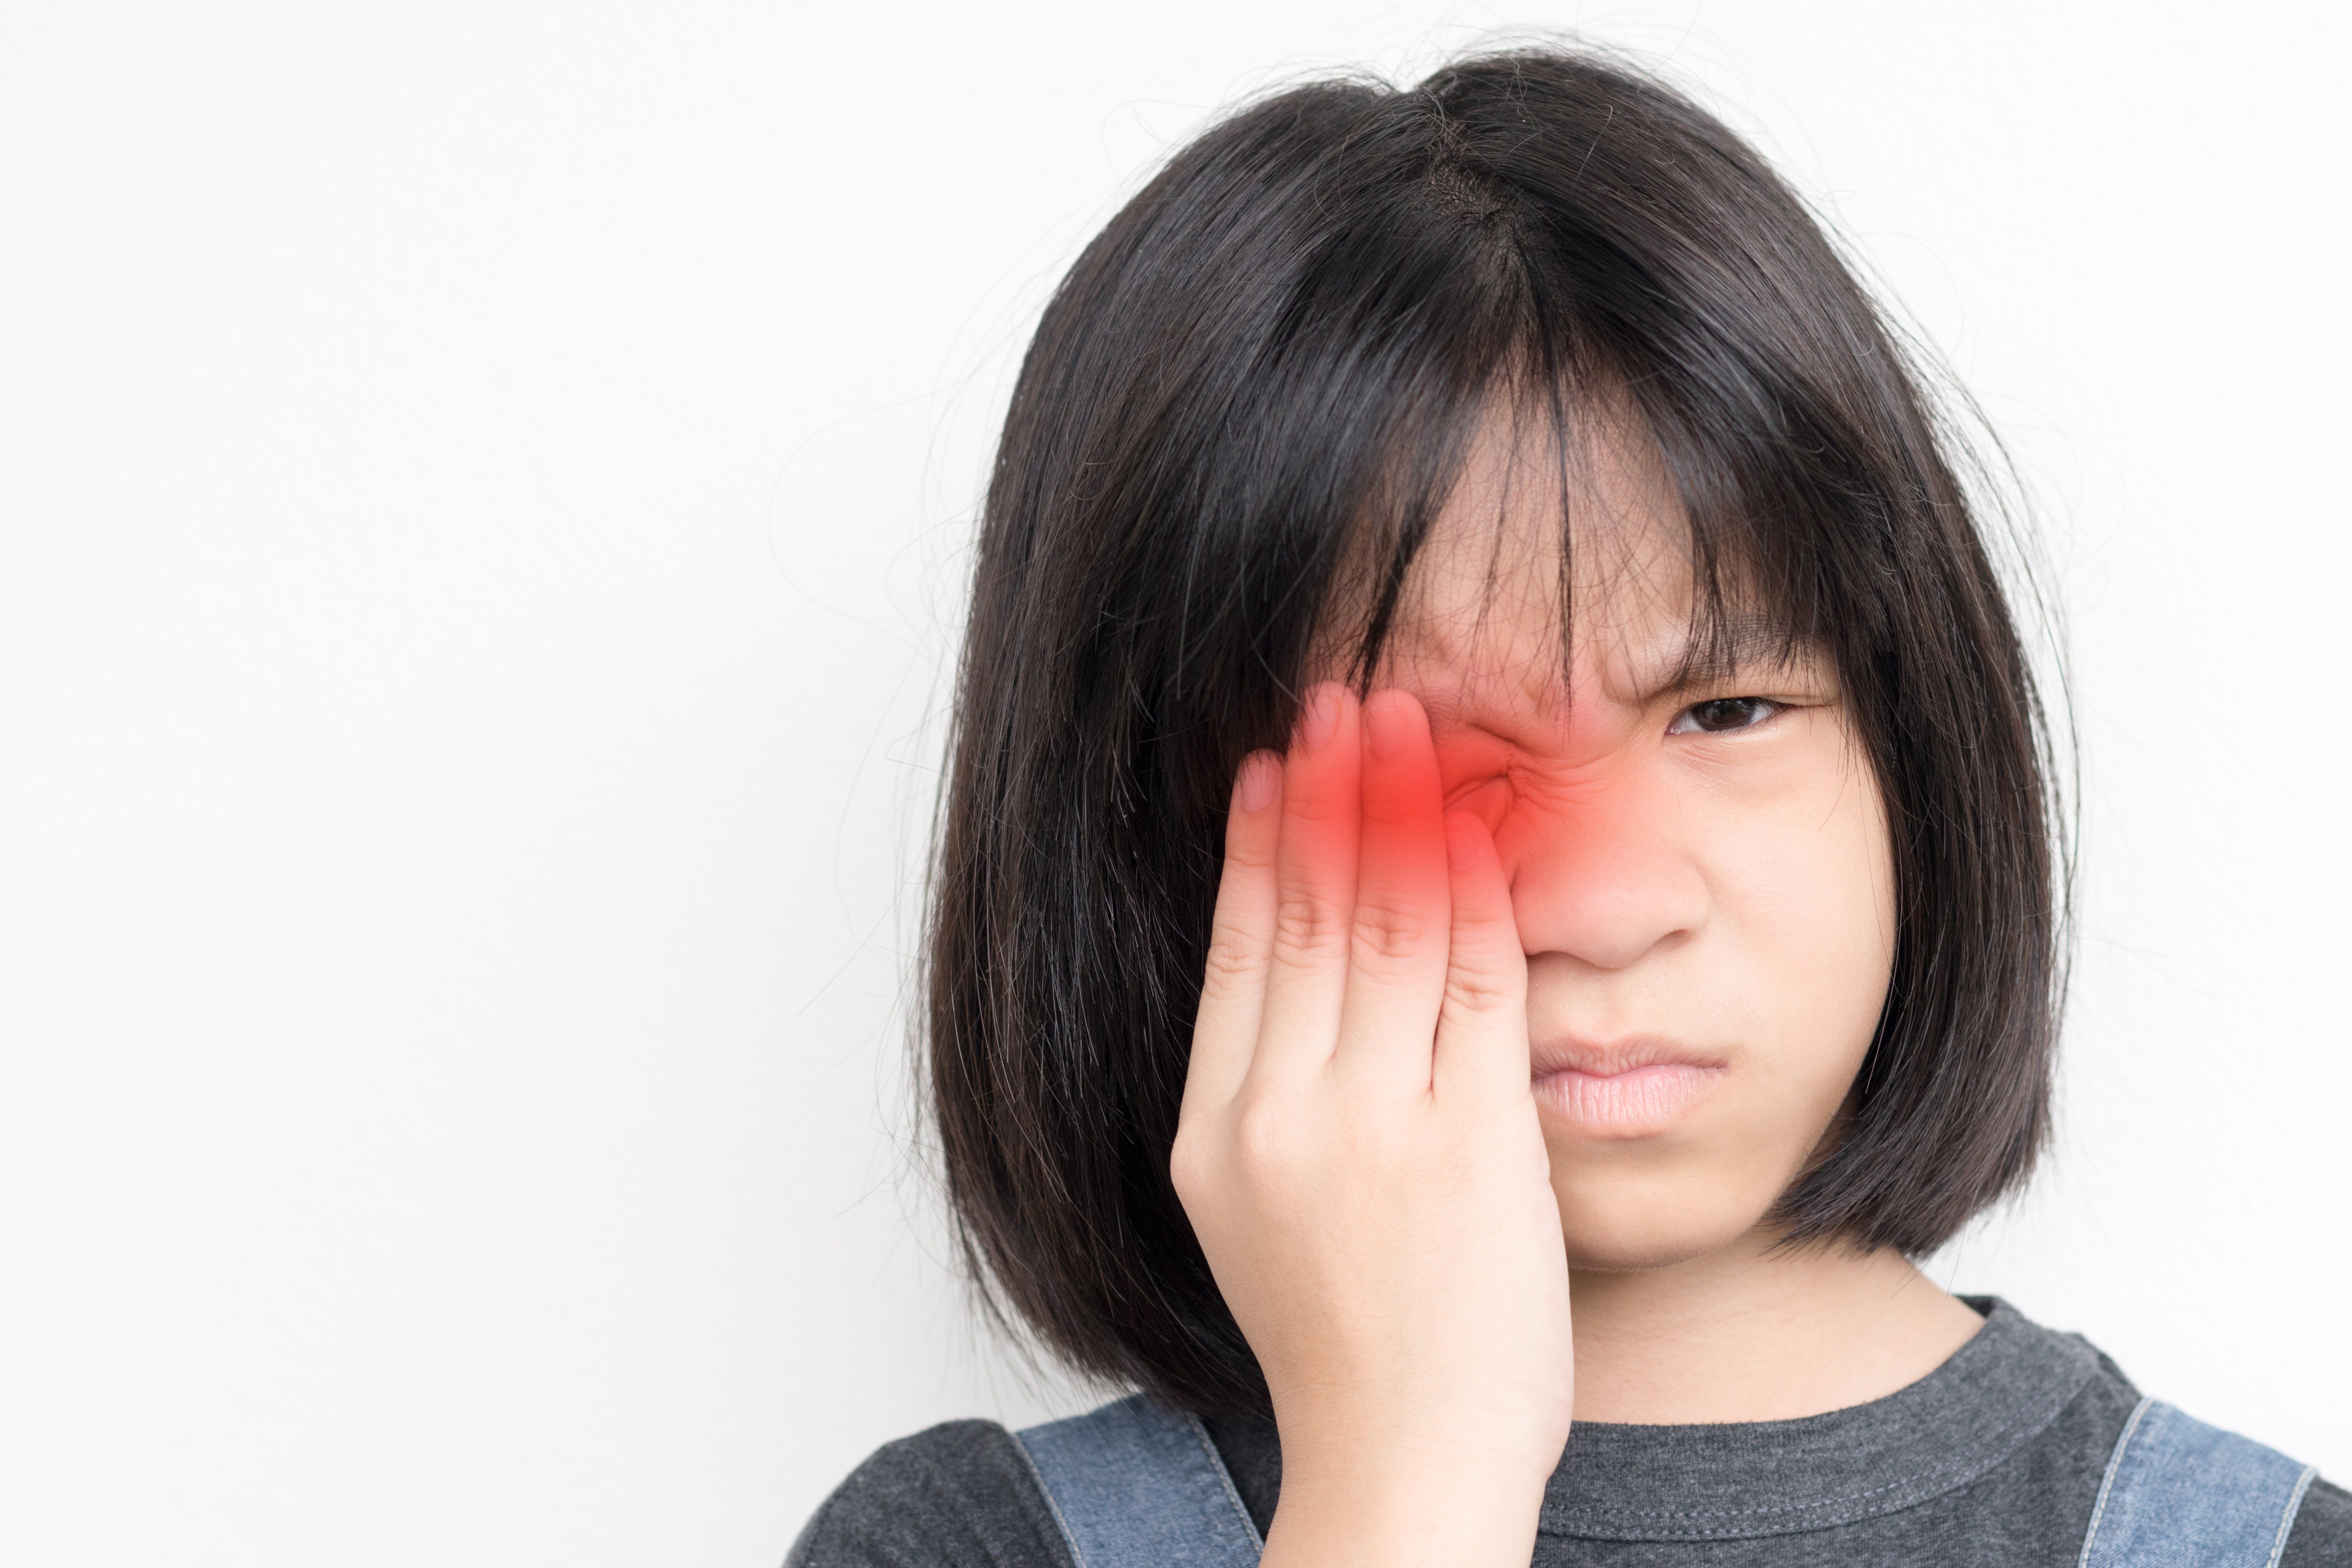 What Causes Pink Eye?